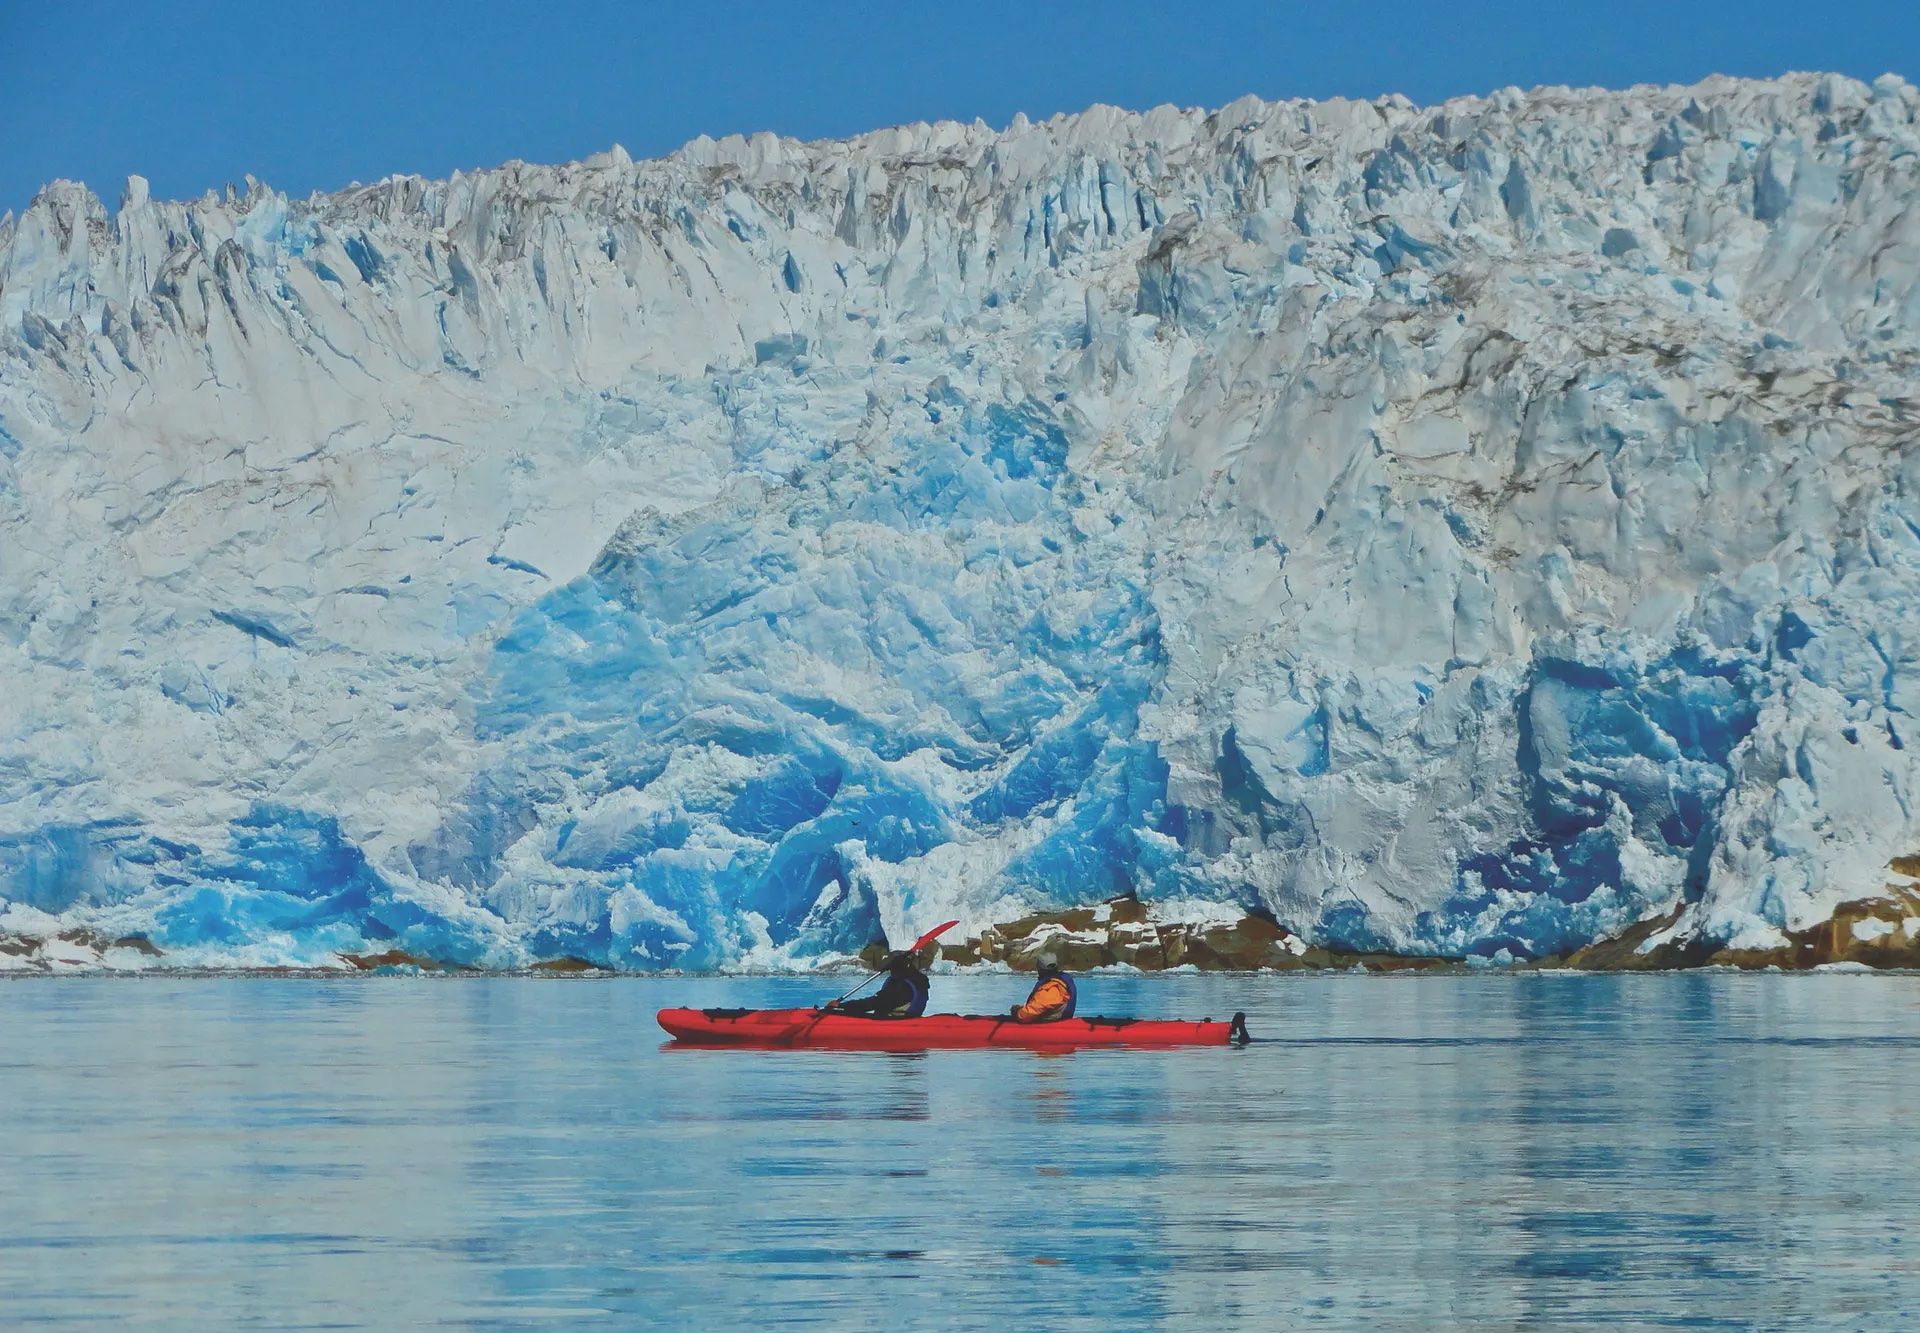 Kayaking in Greenland, passing a huge glacier.